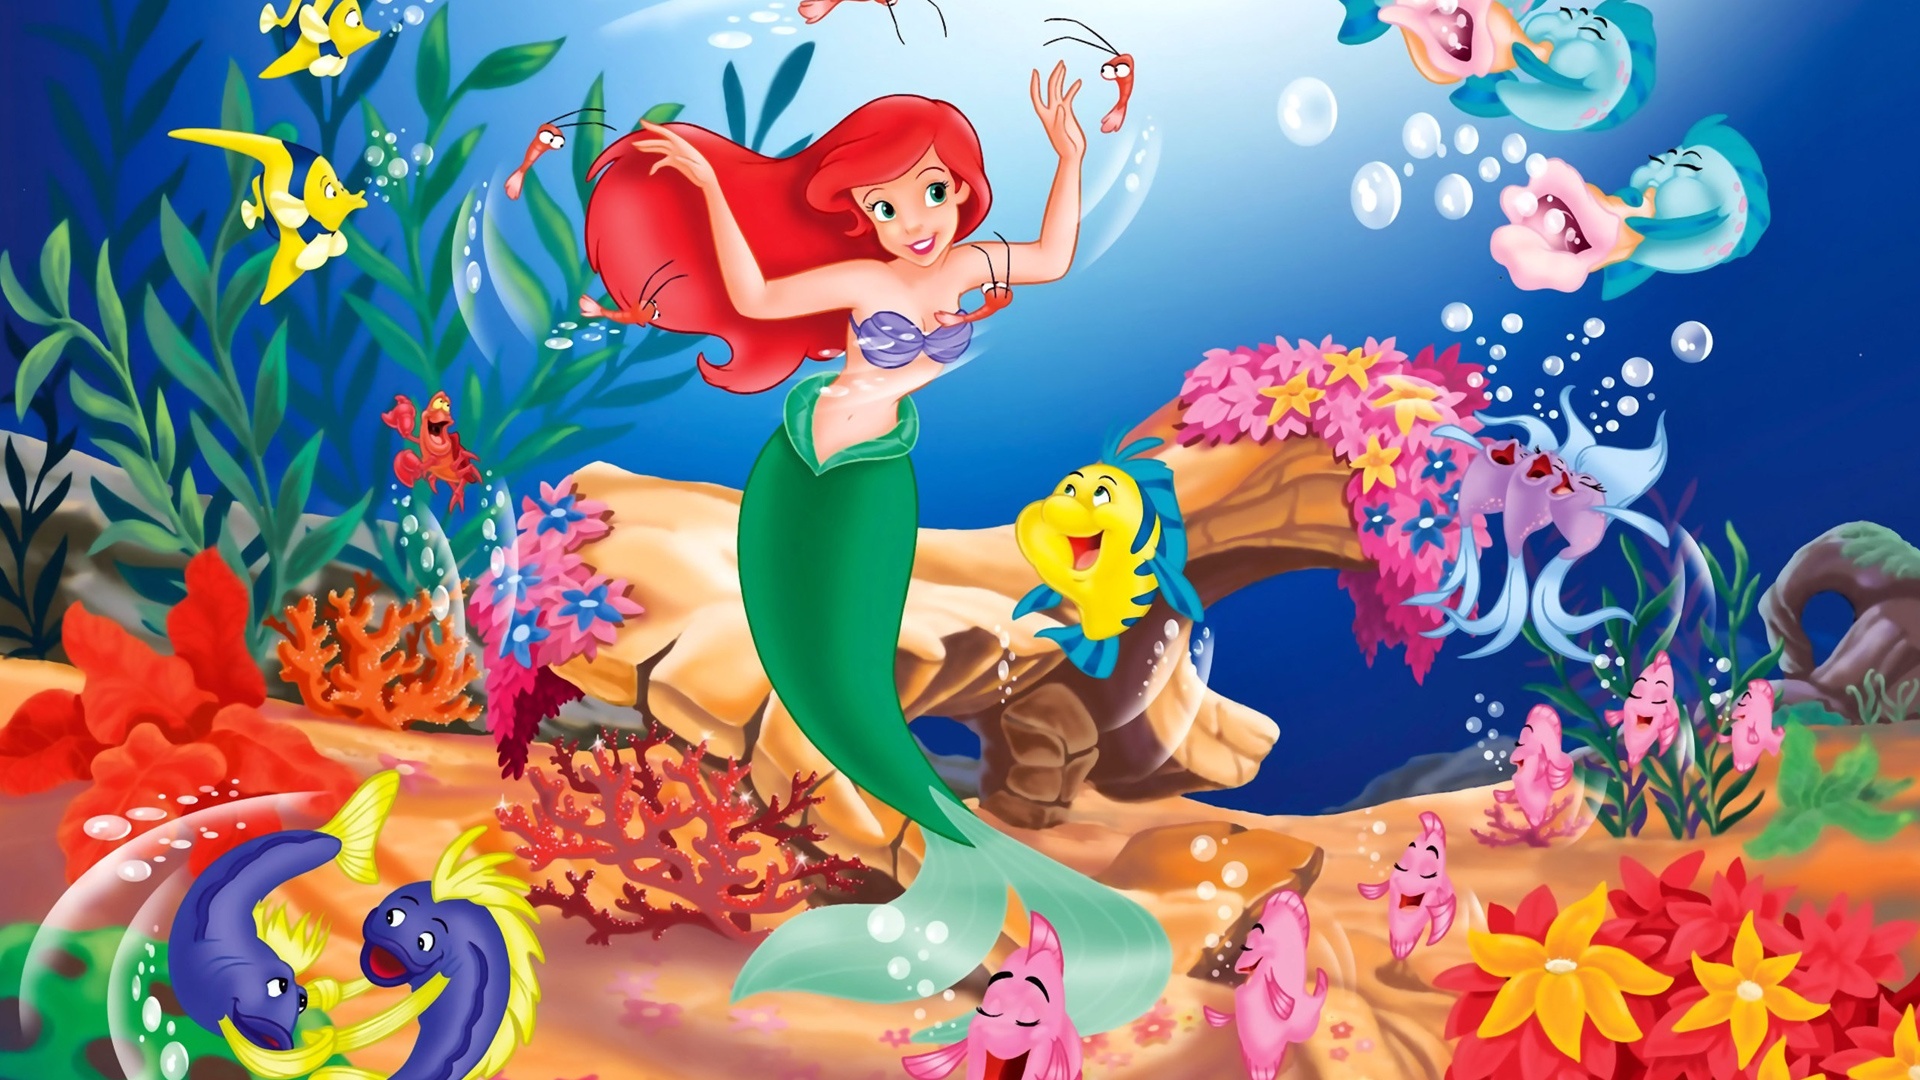 Disney The Little Mermaid Wallpapers | HD Wallpapers